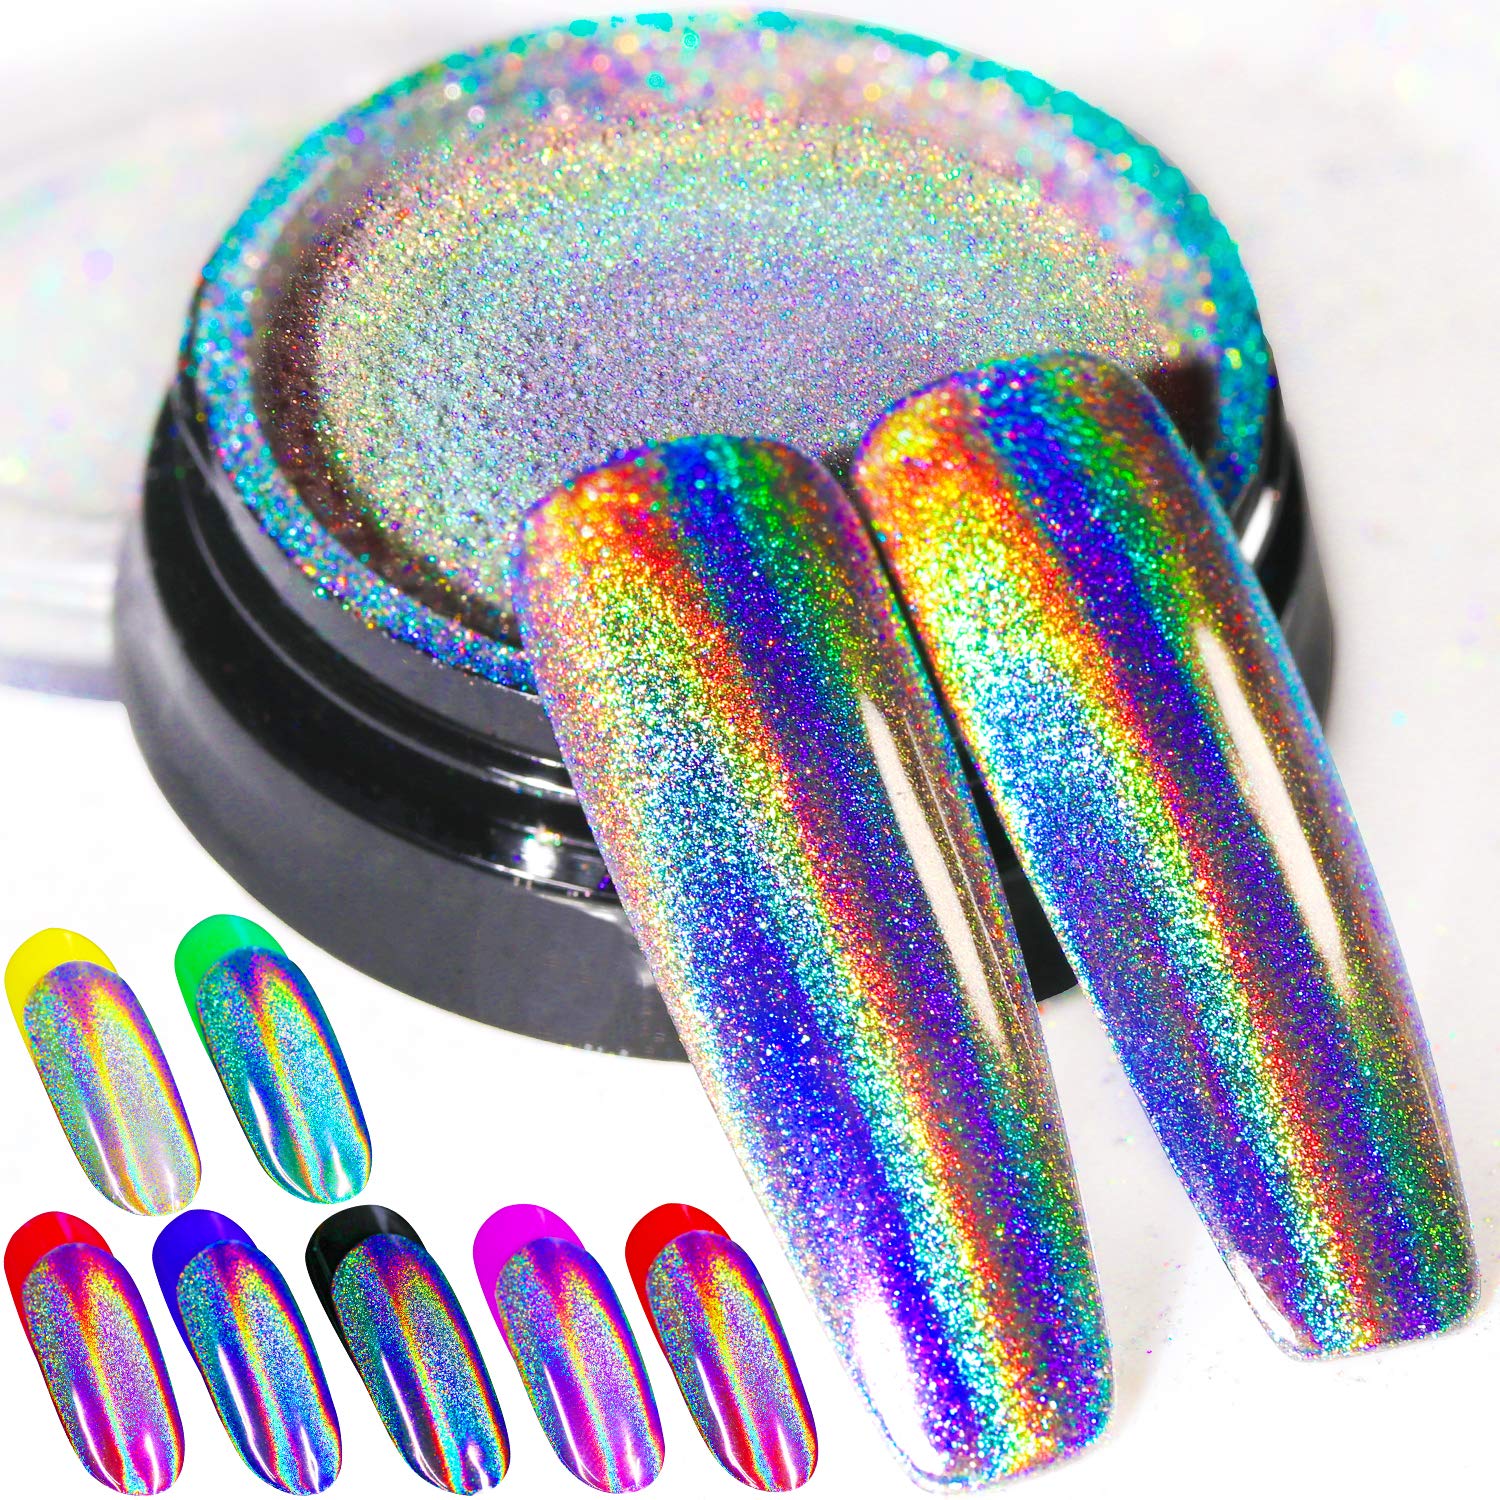 Holographic Nail Powder Fine Rainbow Holo Unicorn Mirror Laser Effect Multi Chrome Manicure Pigment Glitter Dust For Salon Home Nail Art DIY Deco, 0.04oz/1g, Sponge Tool/3pcs